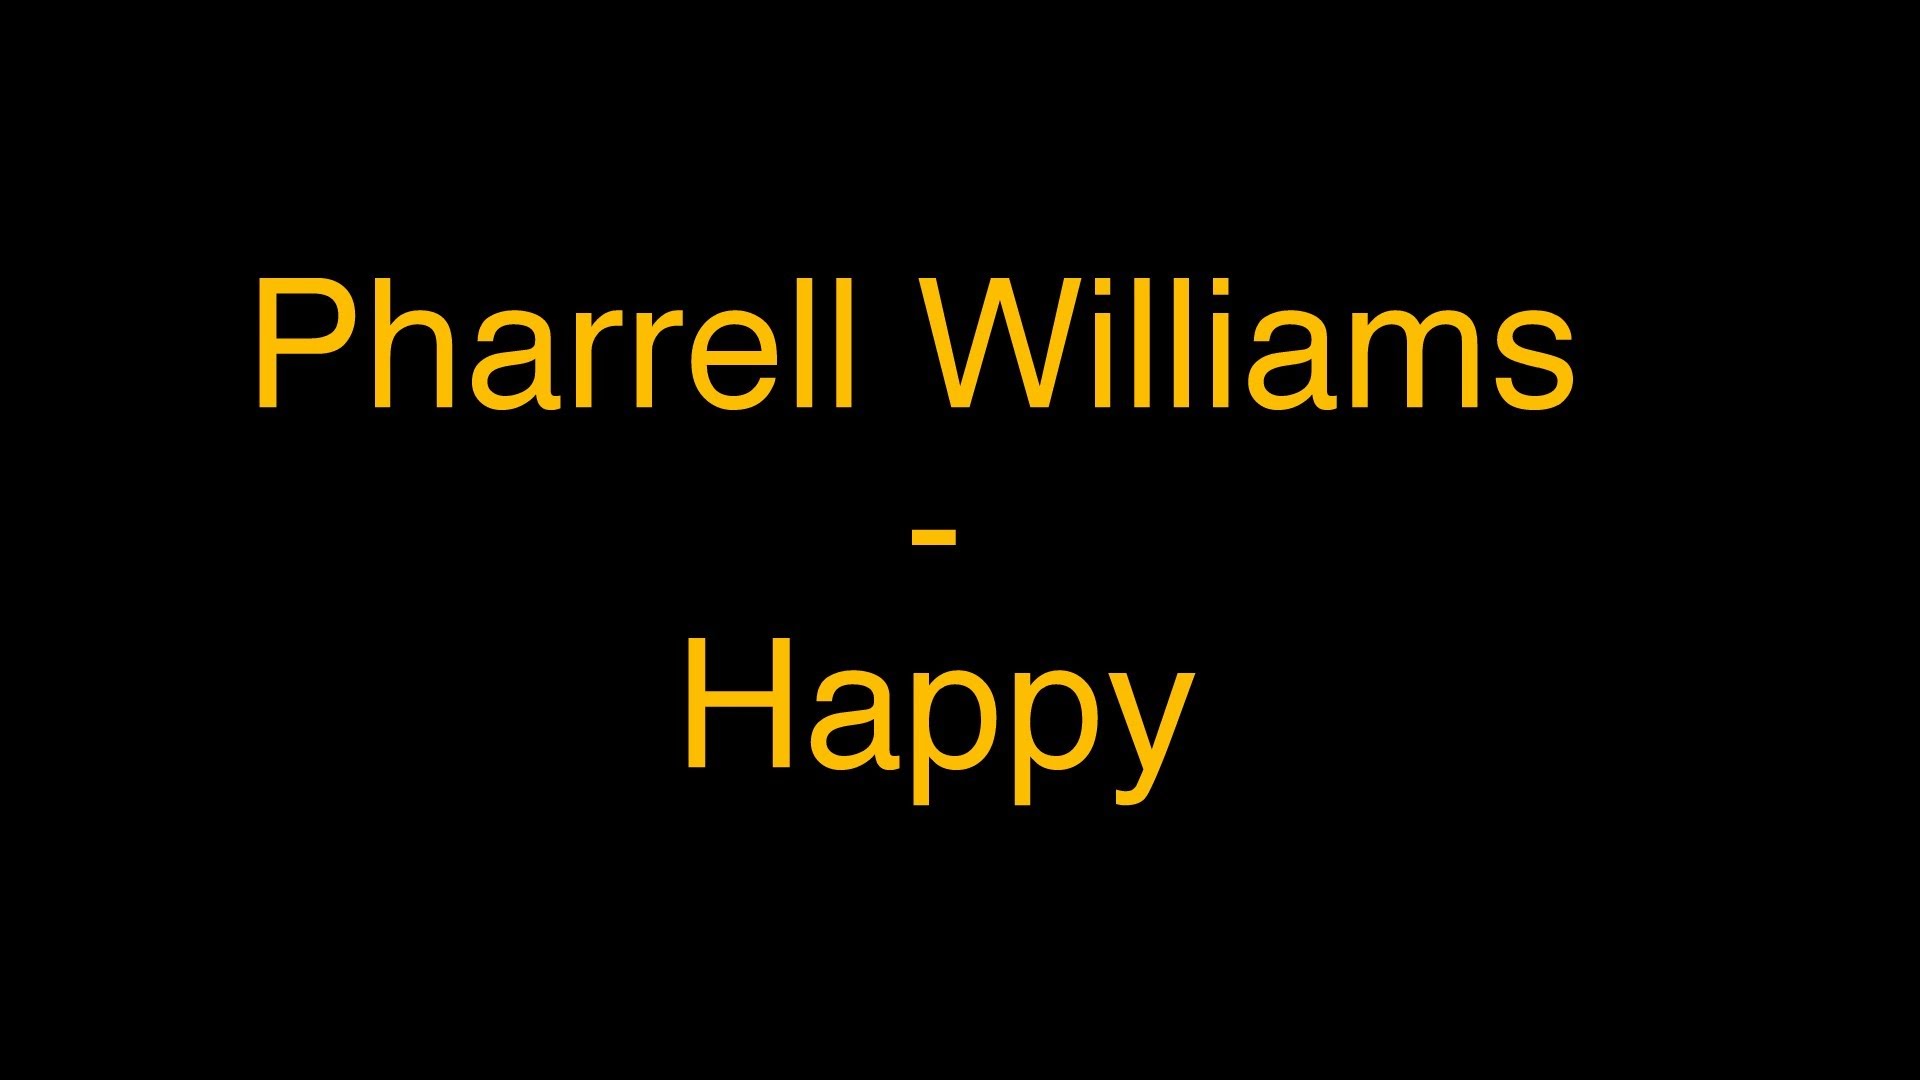 Happy - Pharrell Williams (Original + Lyrics) HD - YouTube